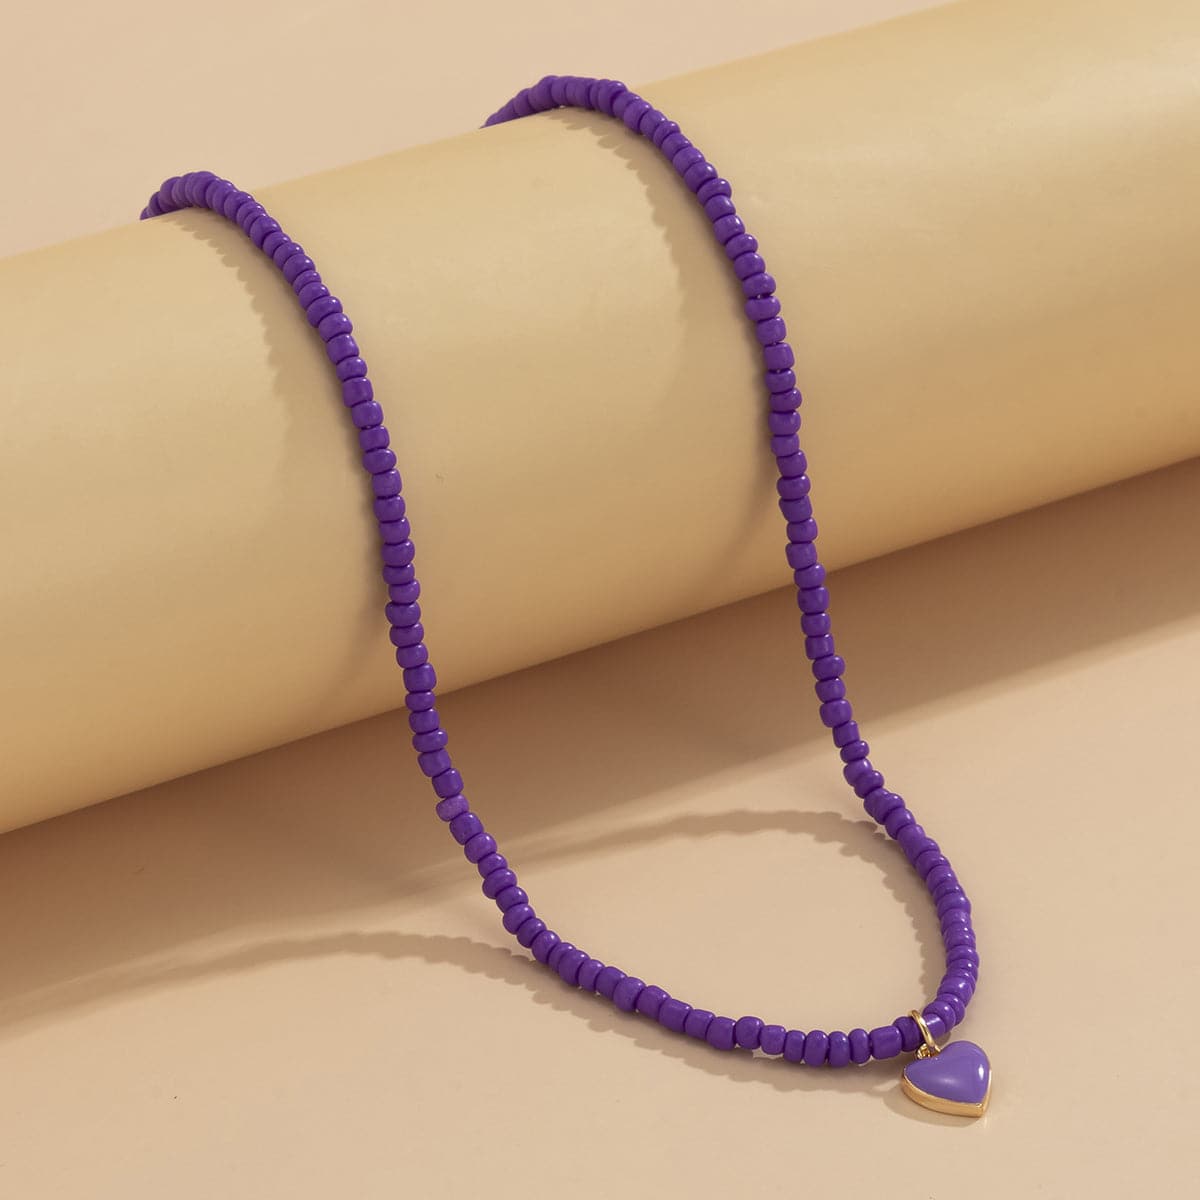 Purple Howlite & Enamel 18K Gold-Plated Heart Necklace